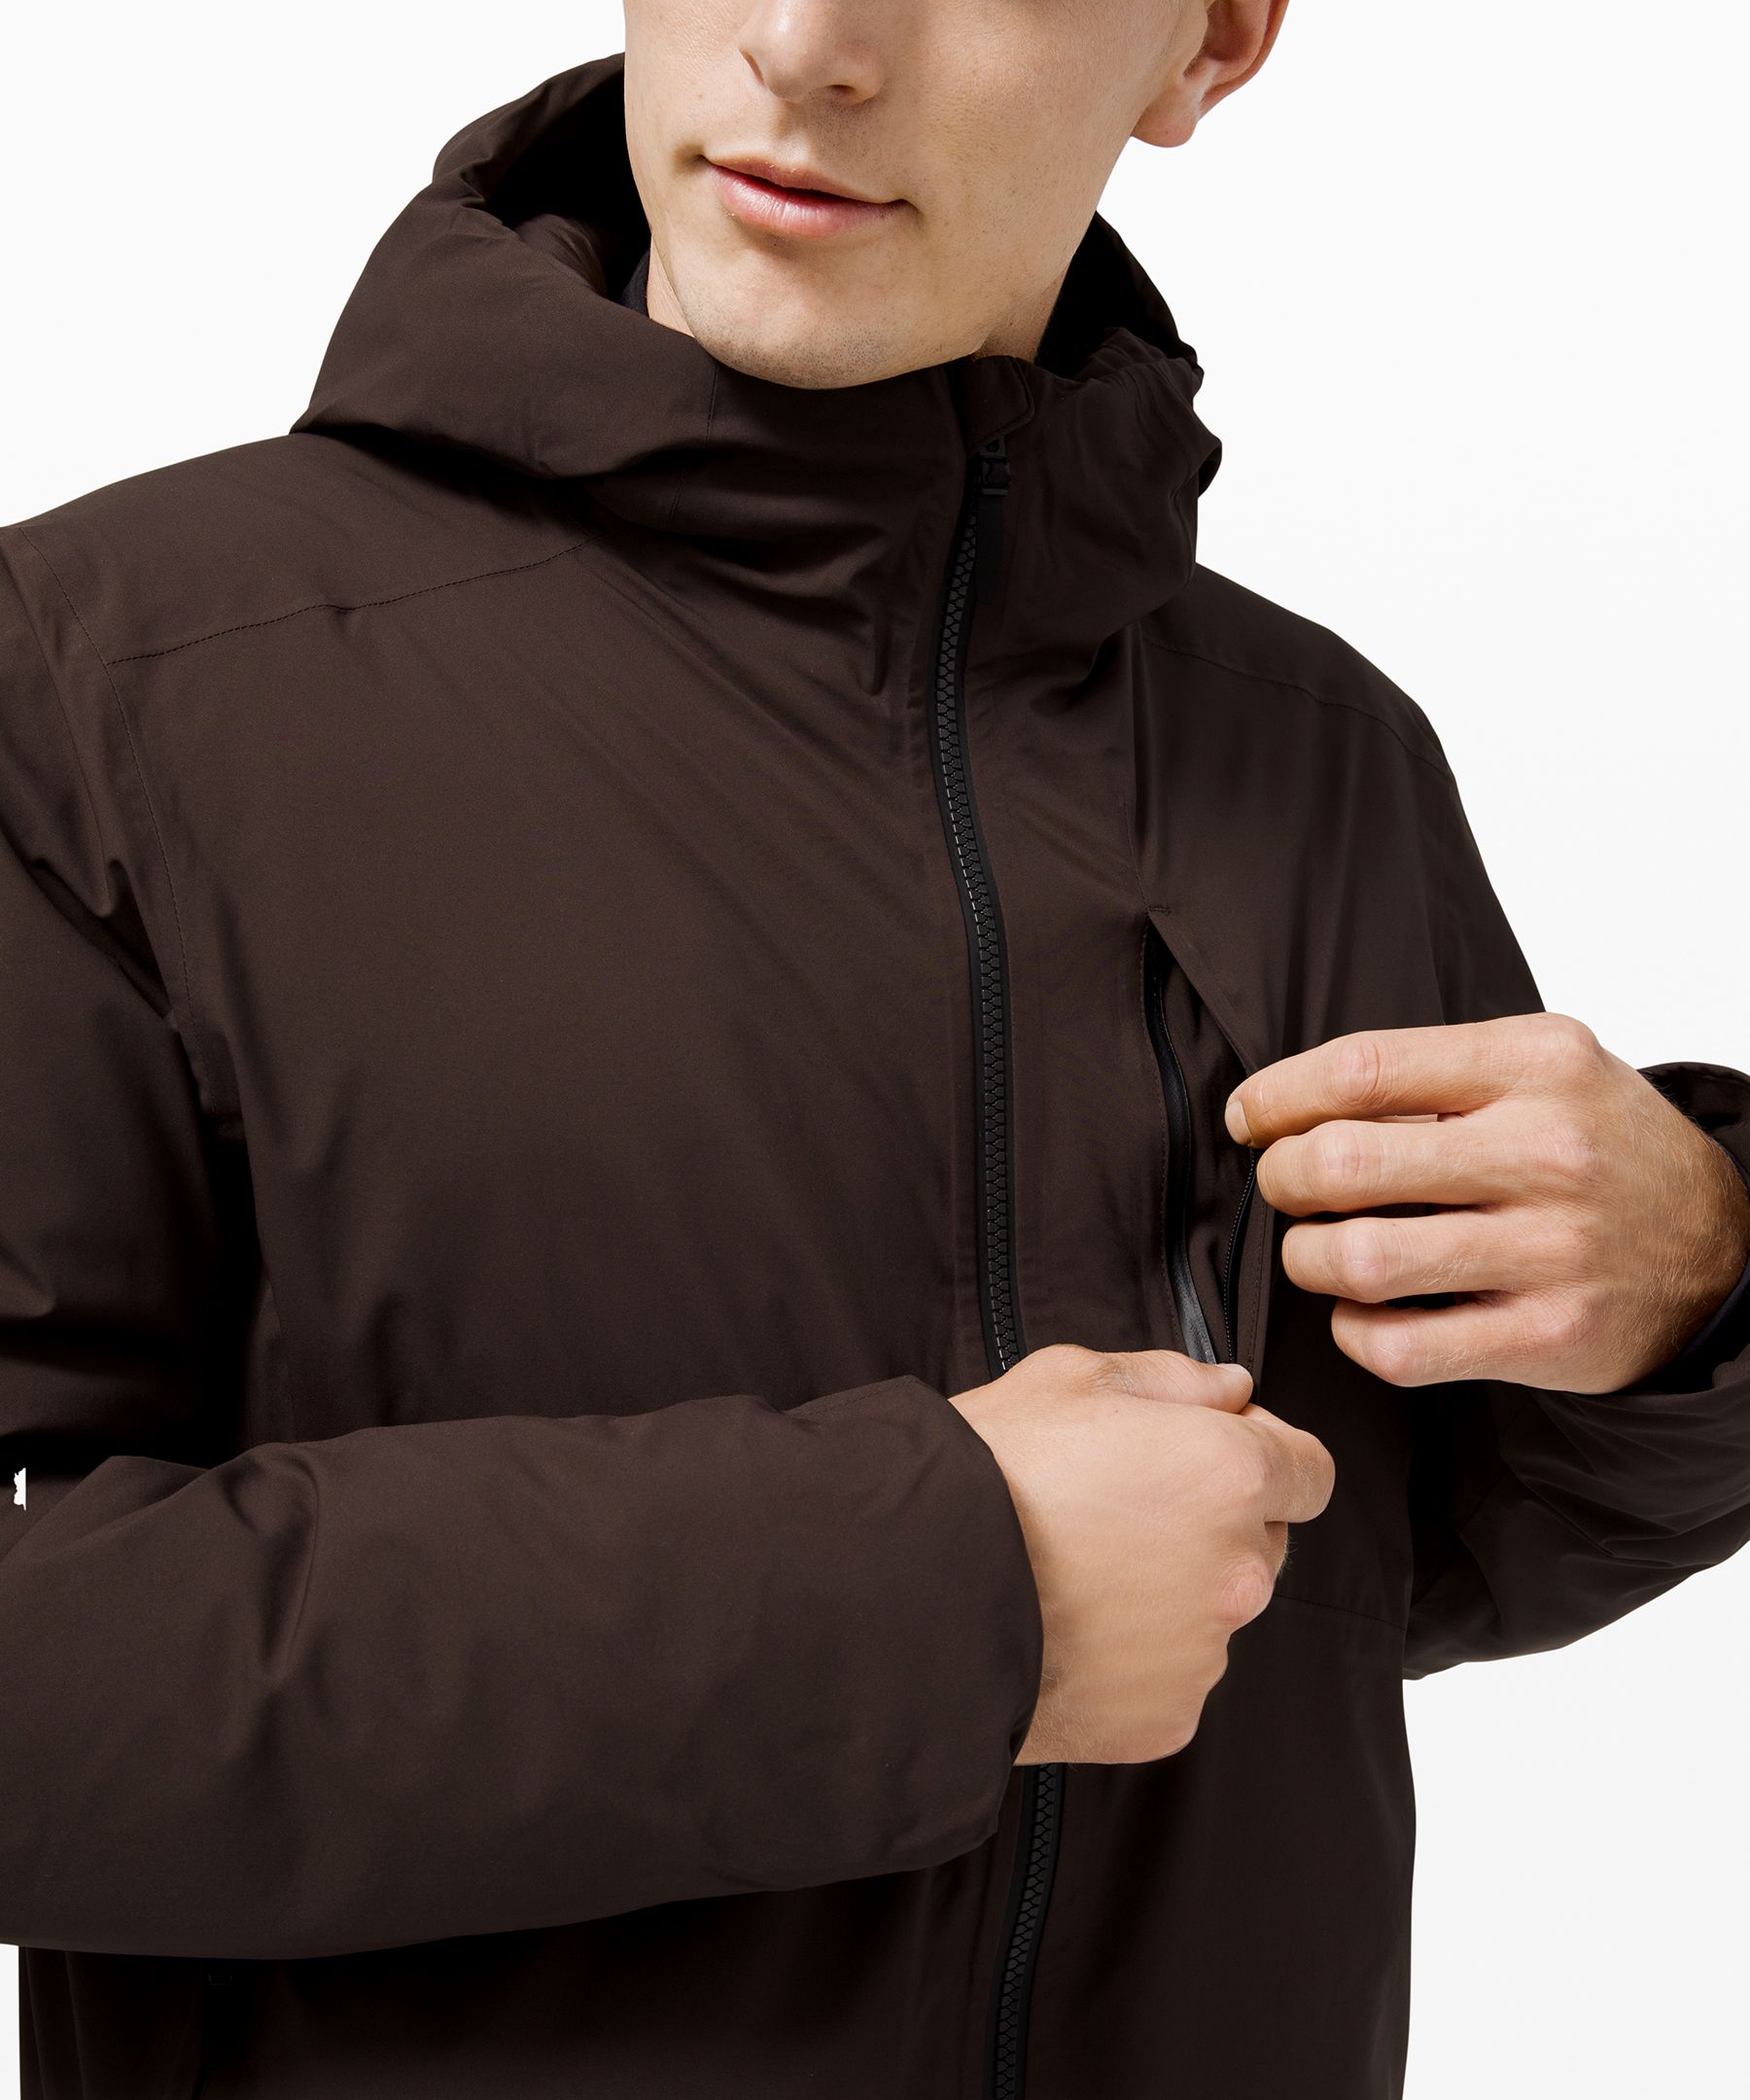 lululemon pinnacle warmth jacket